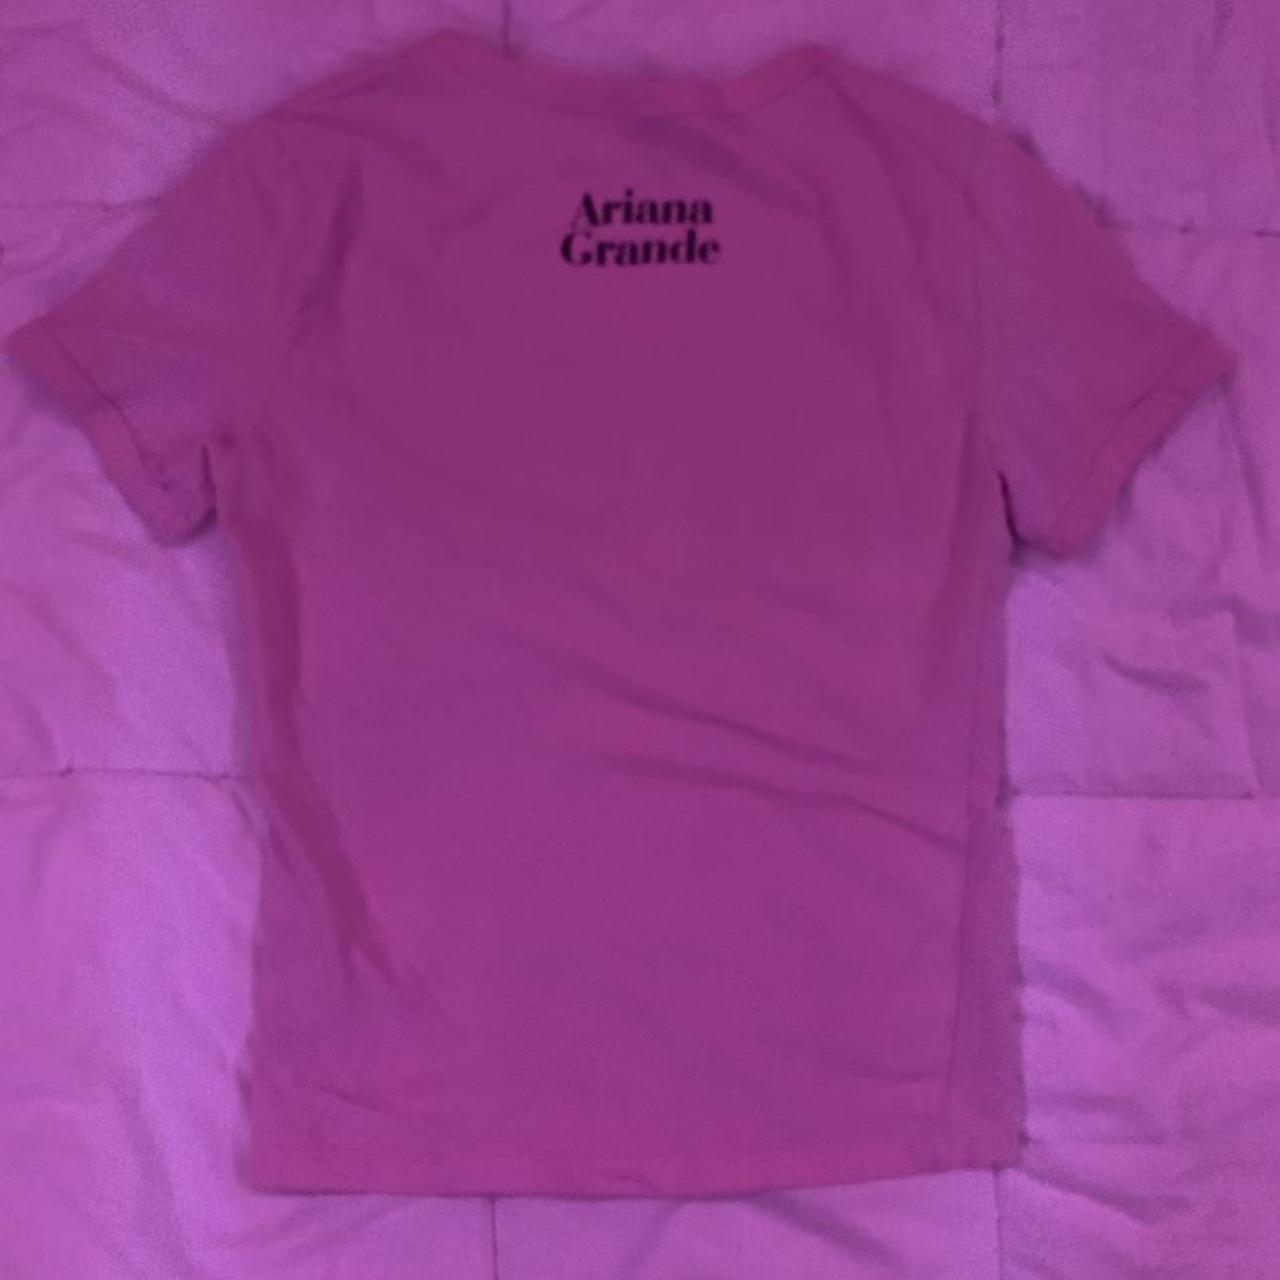 Ariana Grande Men's Pink and Black Shirt (2)